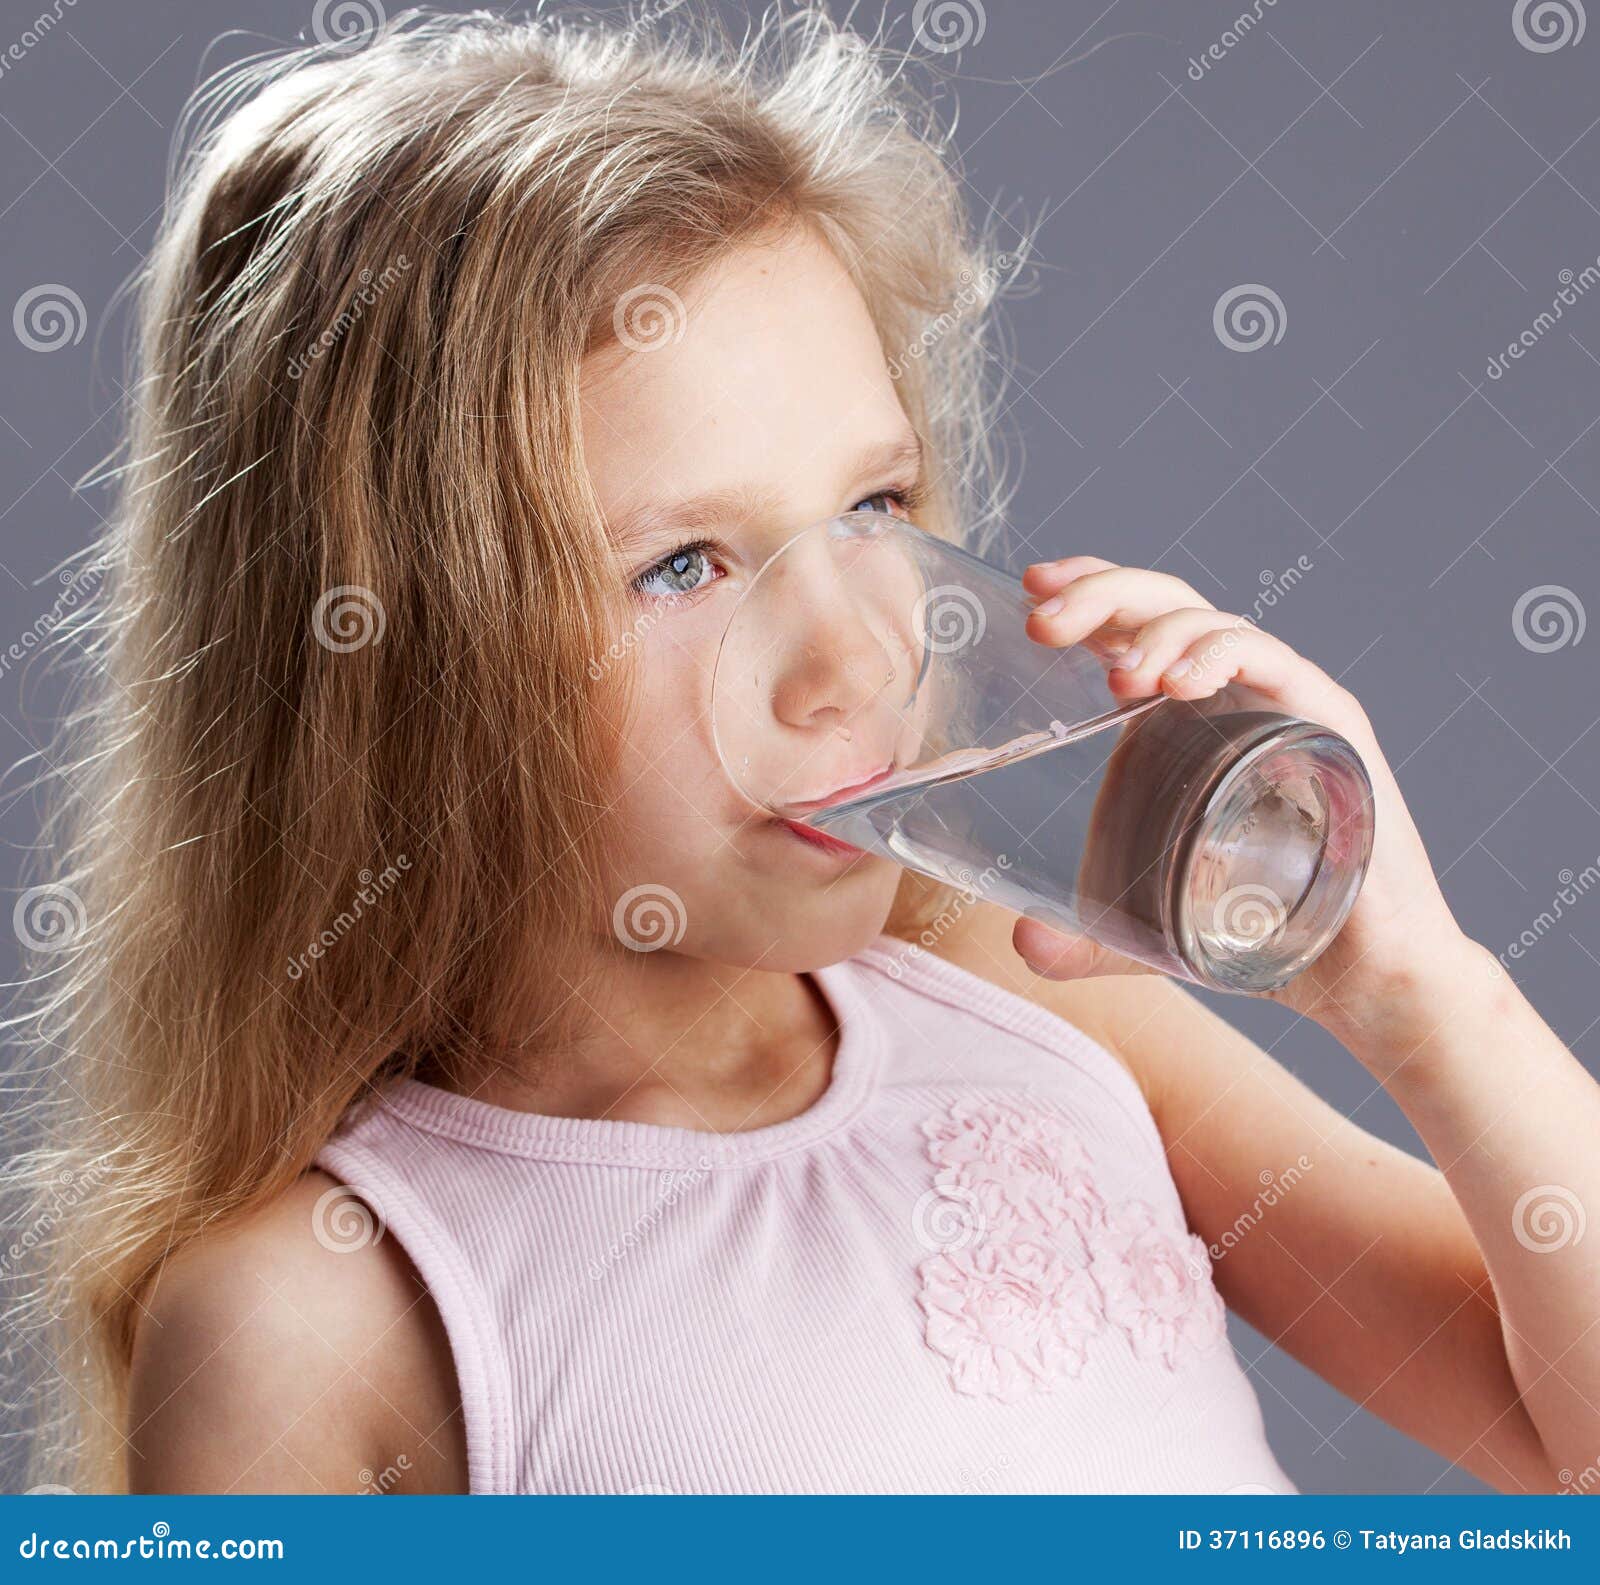 Включи девочка воды. Девочка пьет. Девочка пьет воду. Ребенок пьет воду. Ребенок пьет воду из стакана.